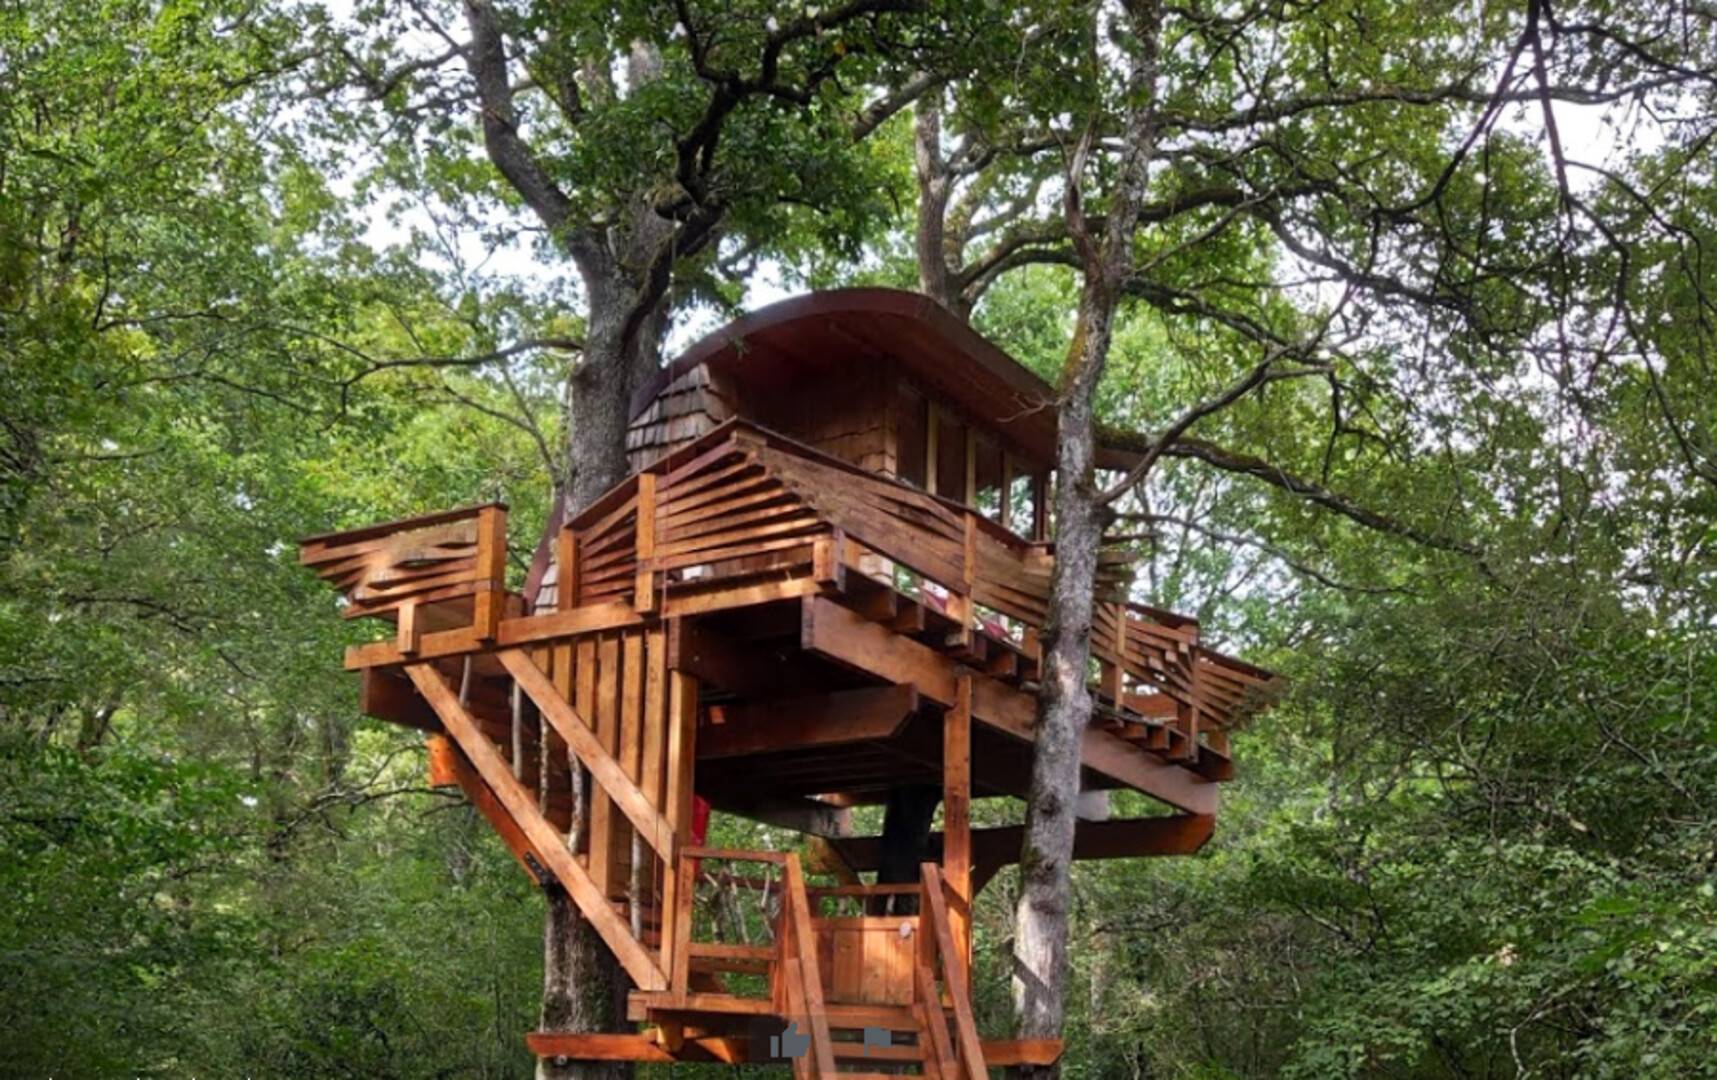 Unique accommodation: cabin in a tree